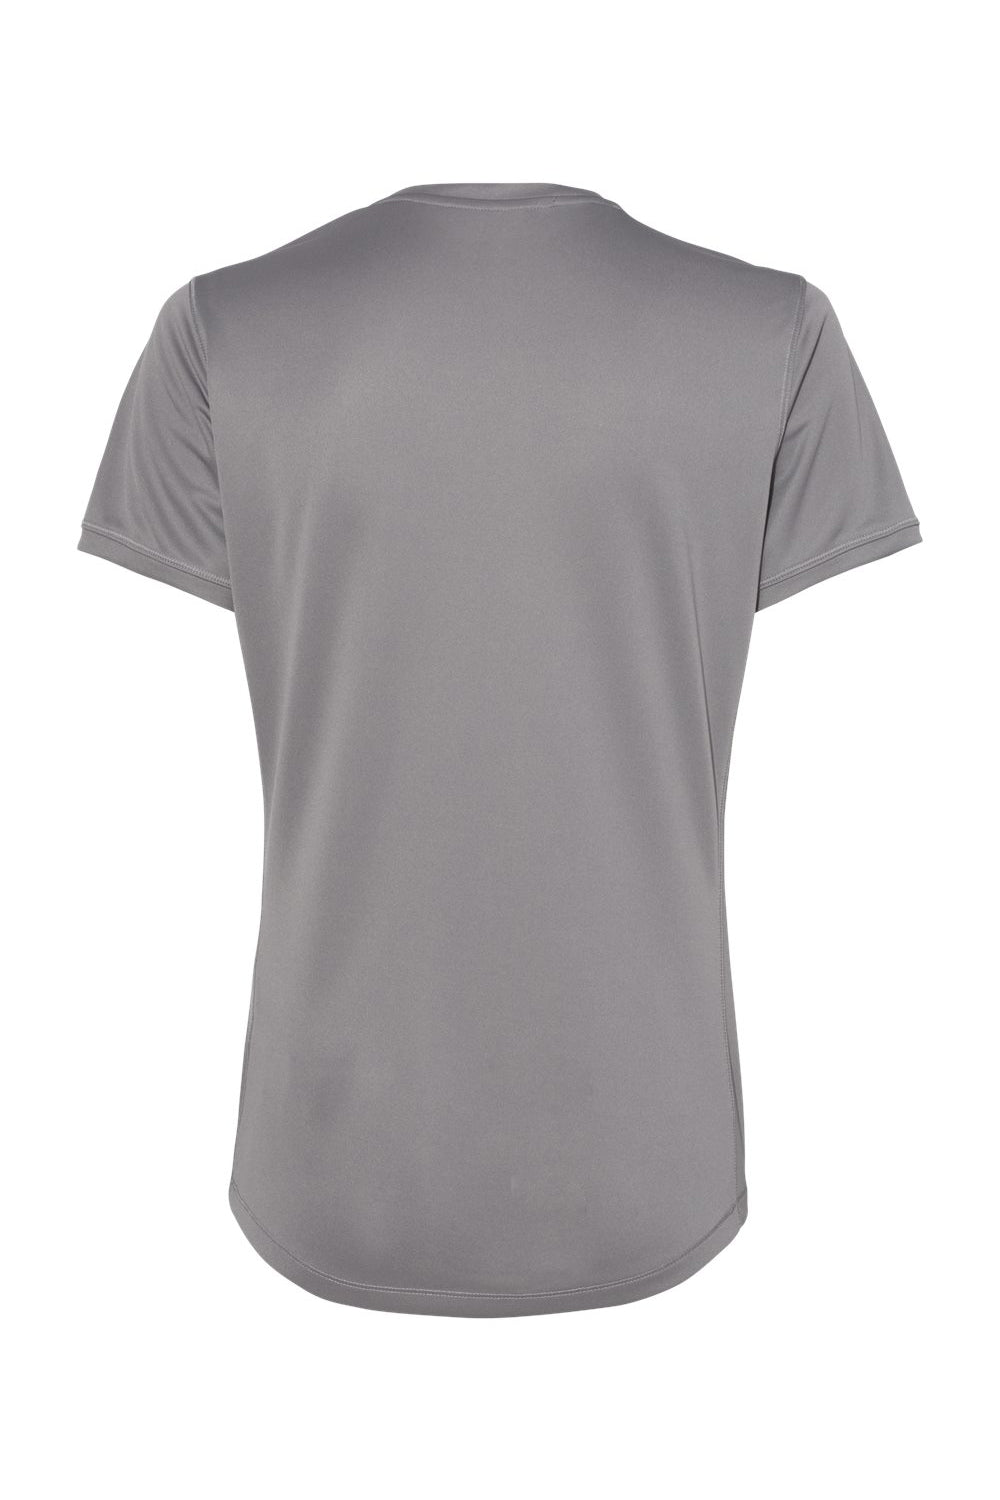 Adidas A377 Womens UPF 50+ Short Sleeve Crewneck T-Shirt Grey Flat Back